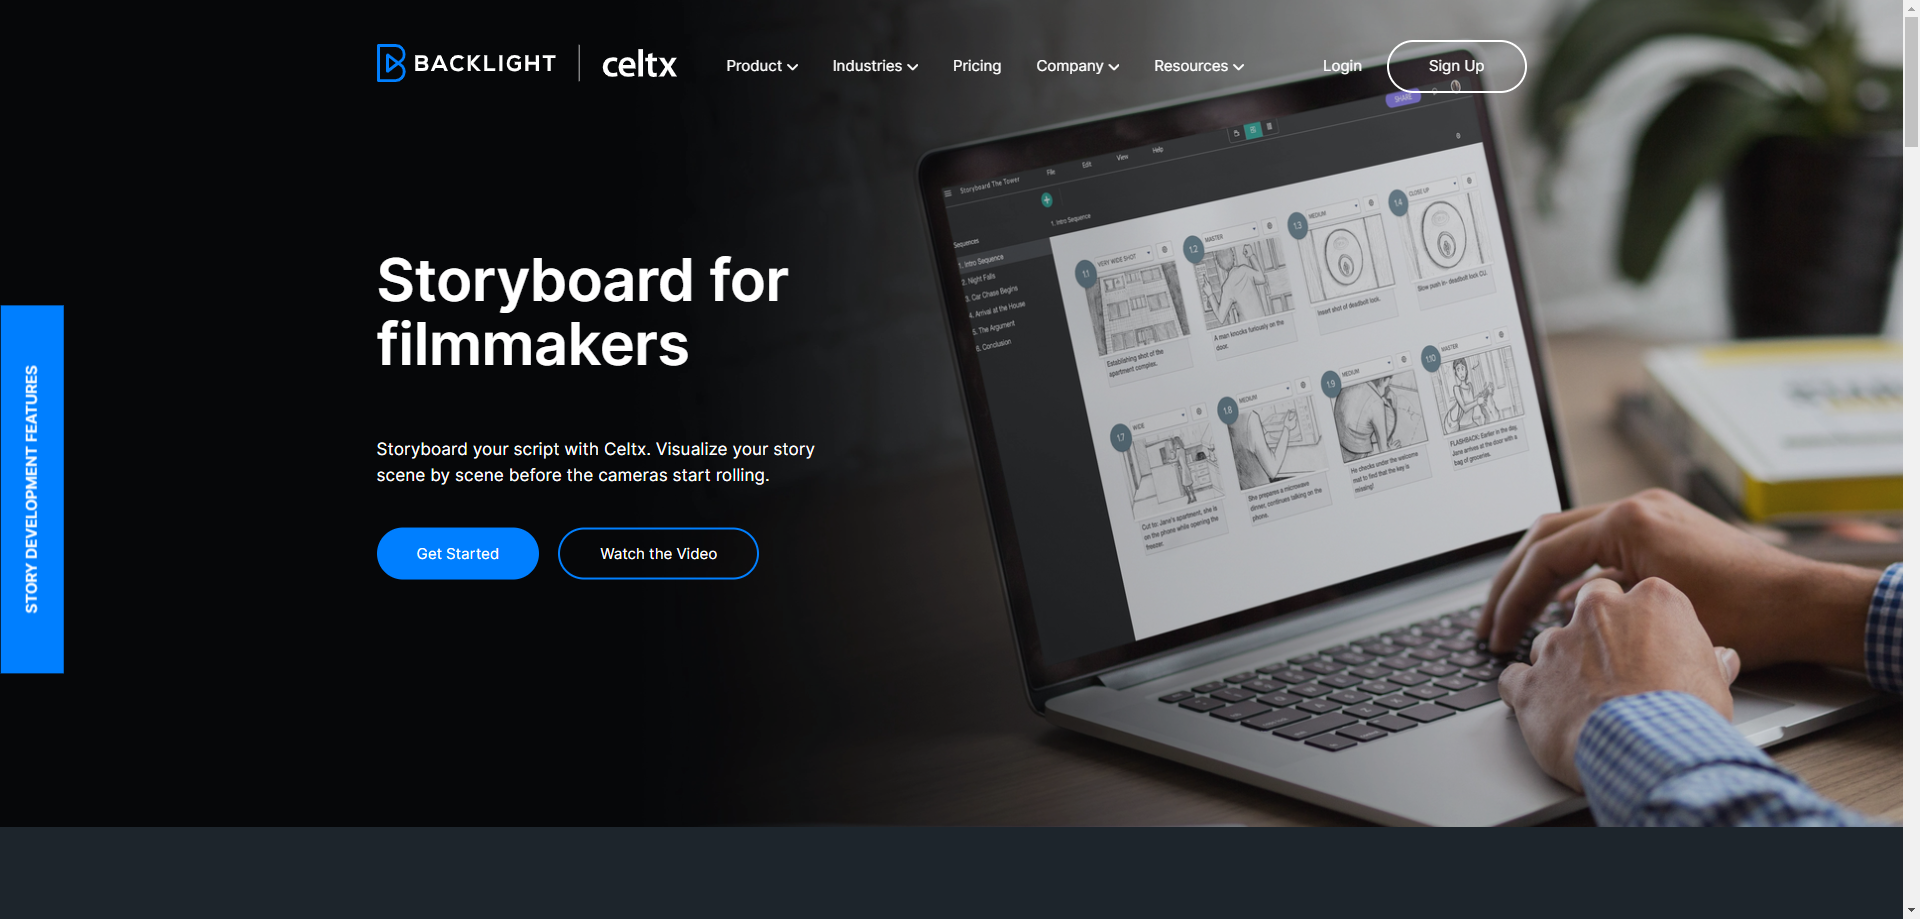 celtx storyboard creator tools